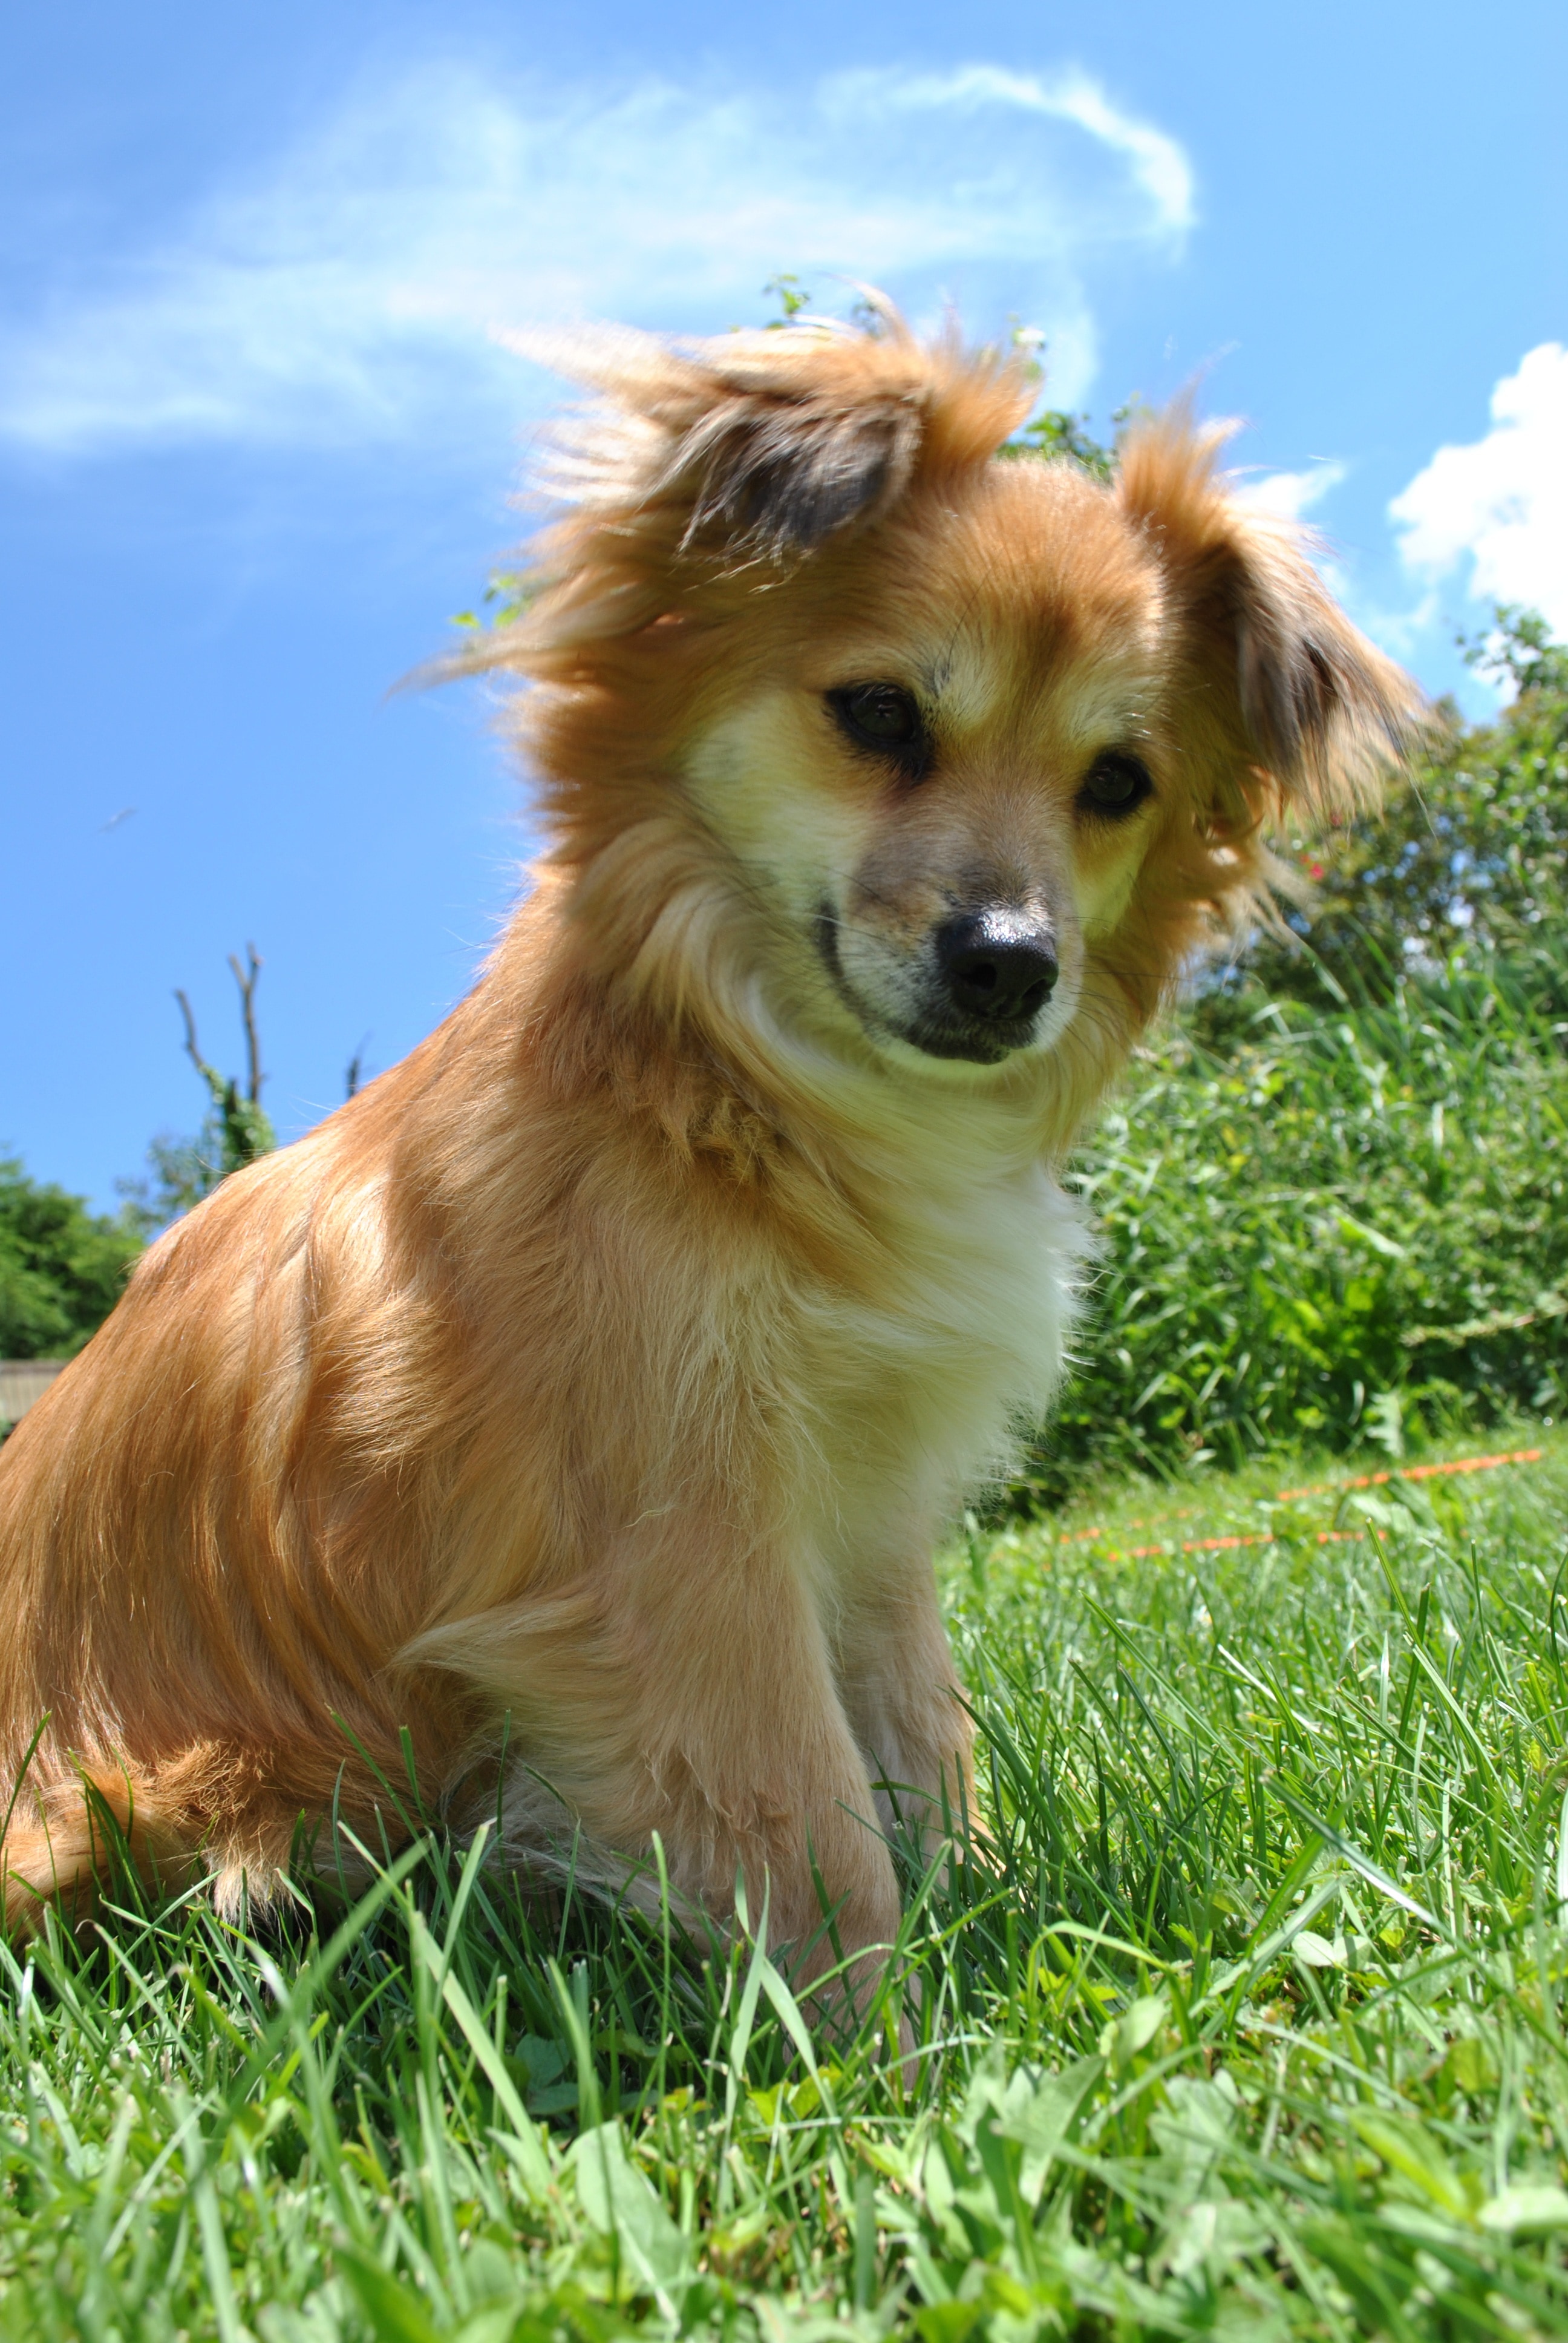 tan medium coated dog on grass field